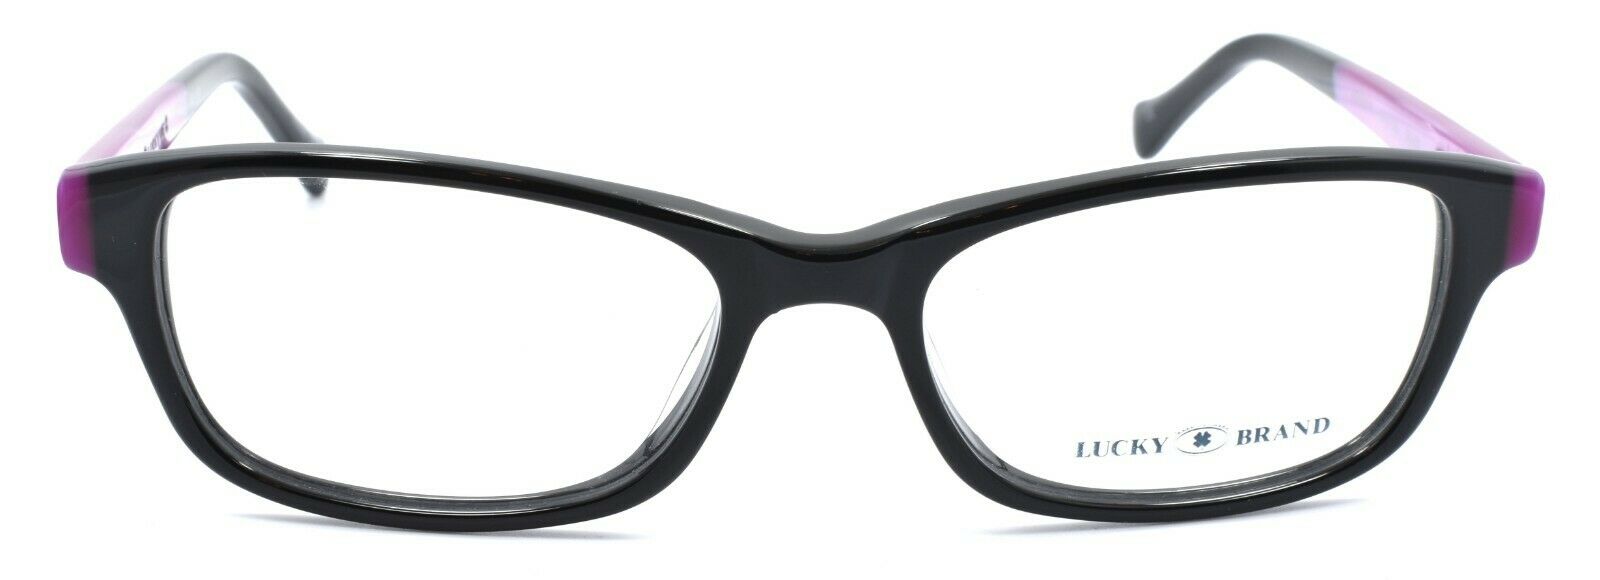 2-LUCKY BRAND Favorite Kids Eyeglasses Frames 49-16-130 Black + CASE-751286228083-IKSpecs